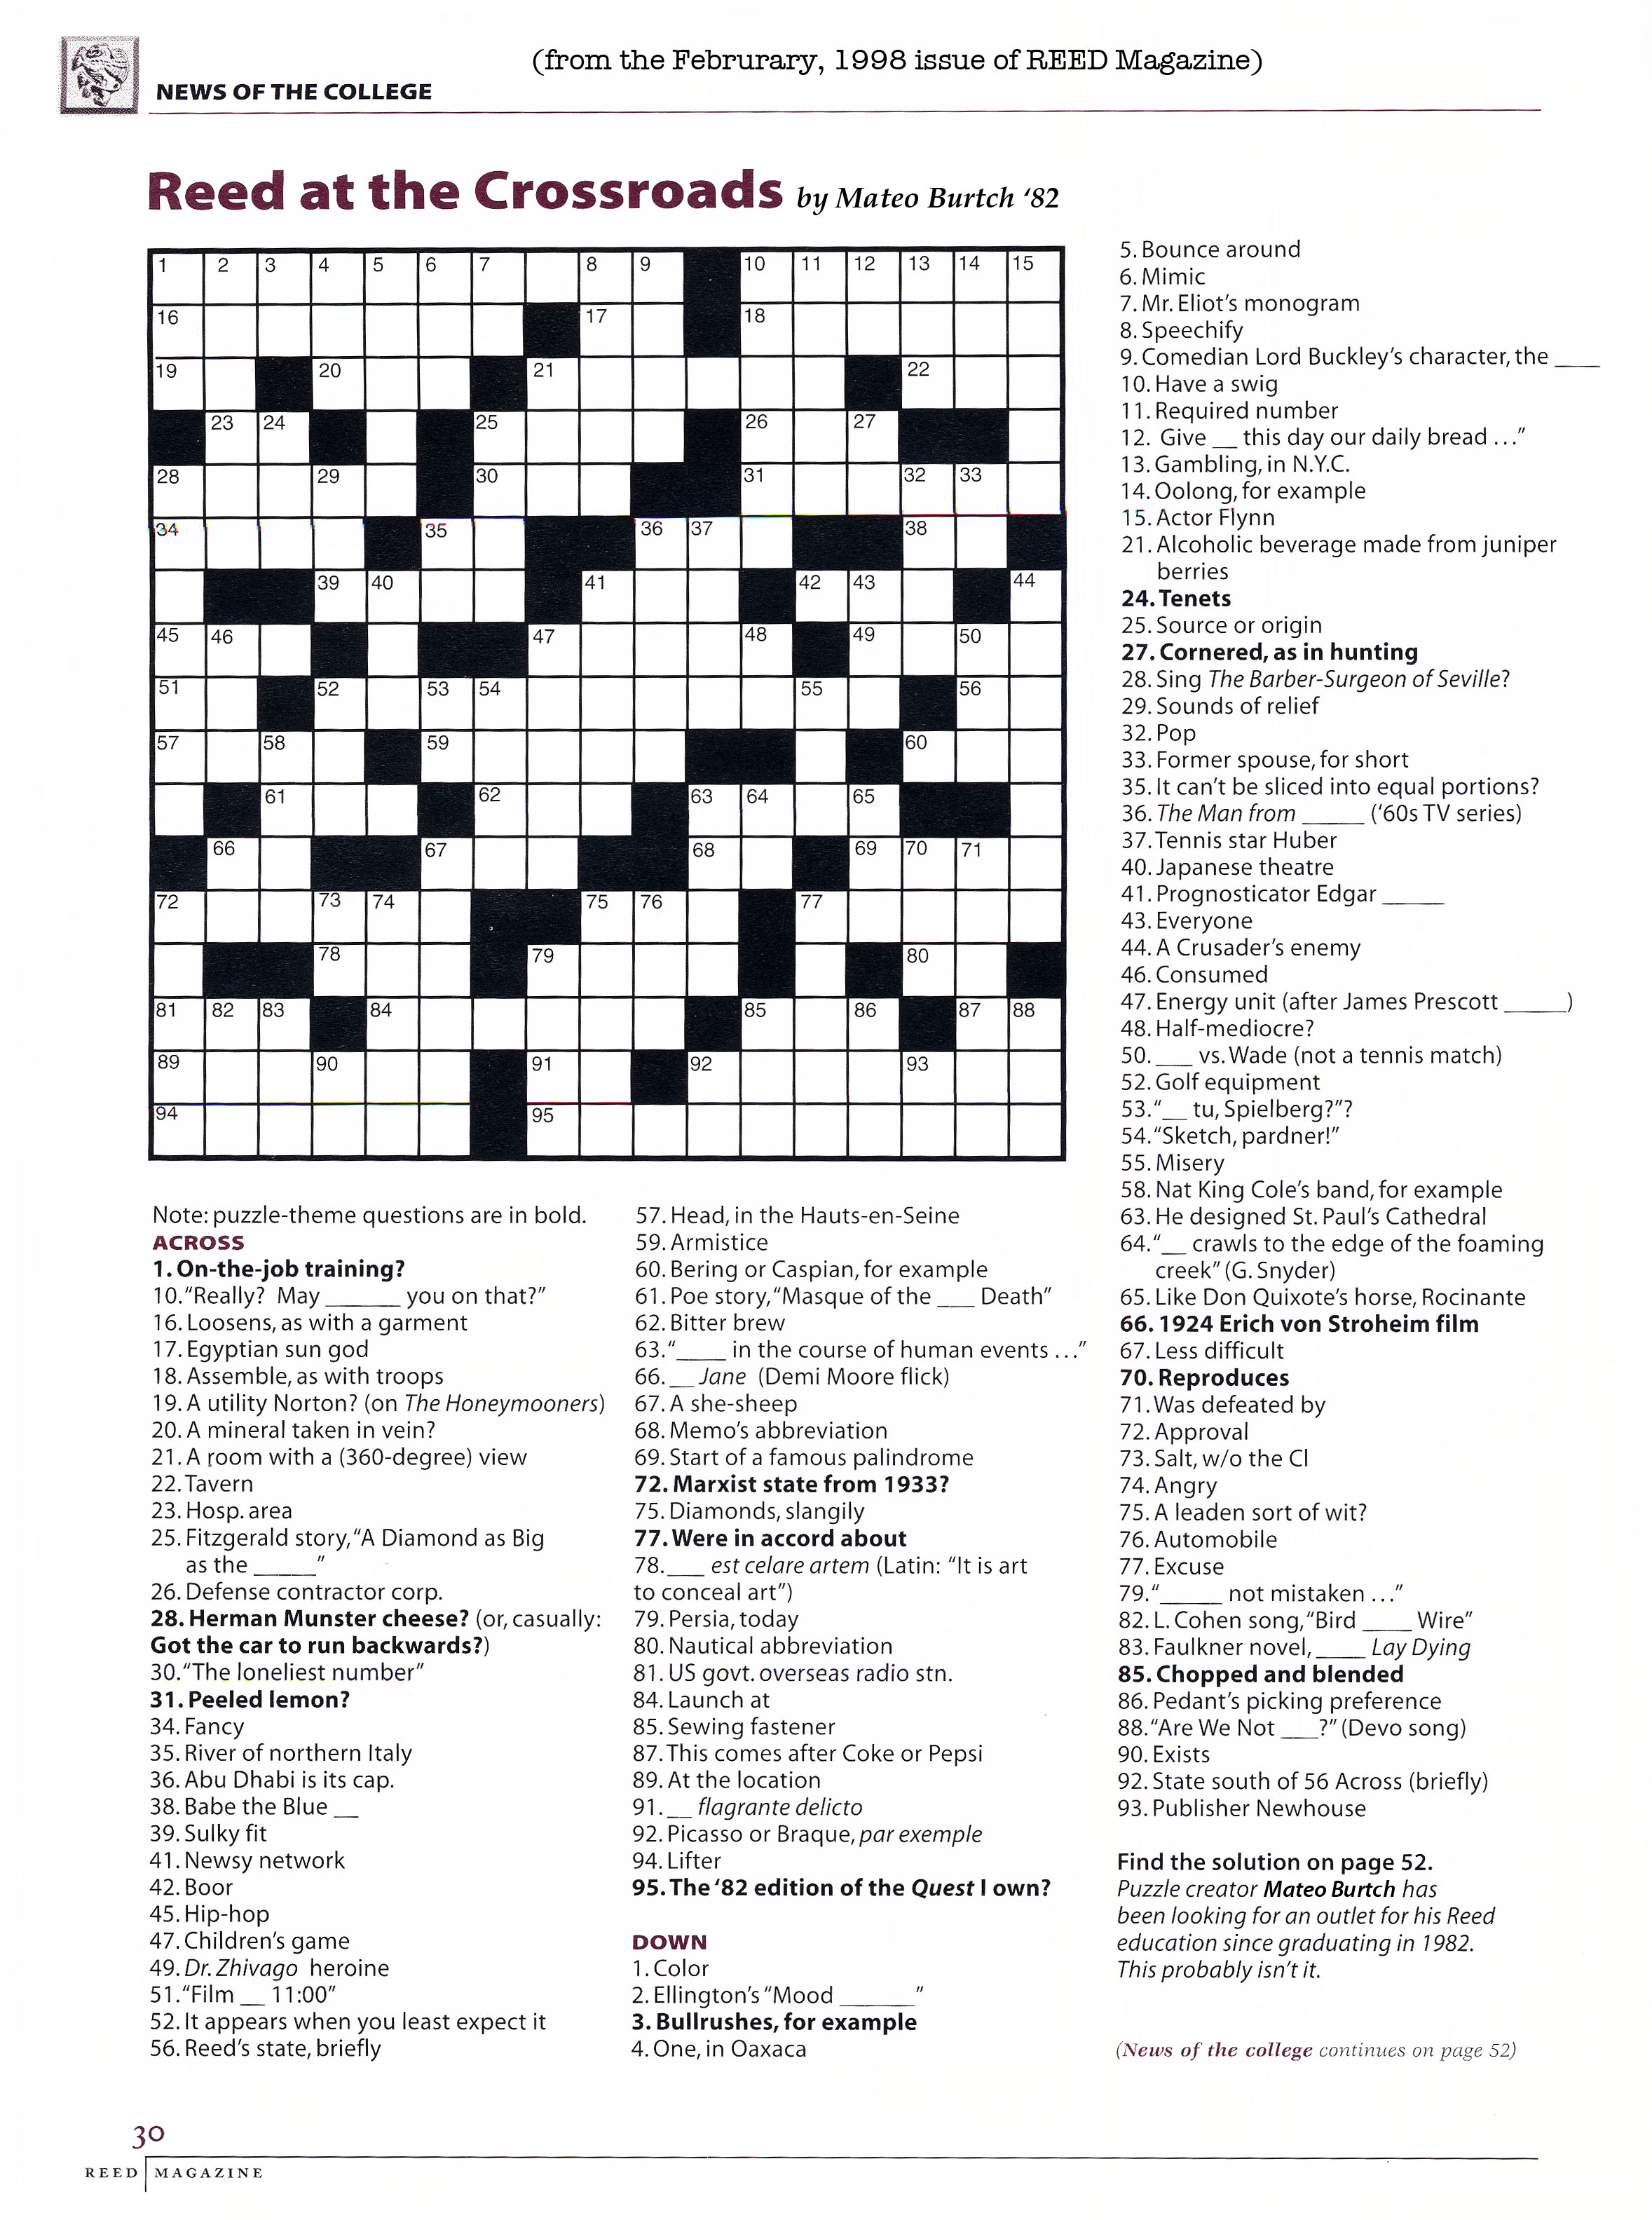 Reed Crossword Puzzle